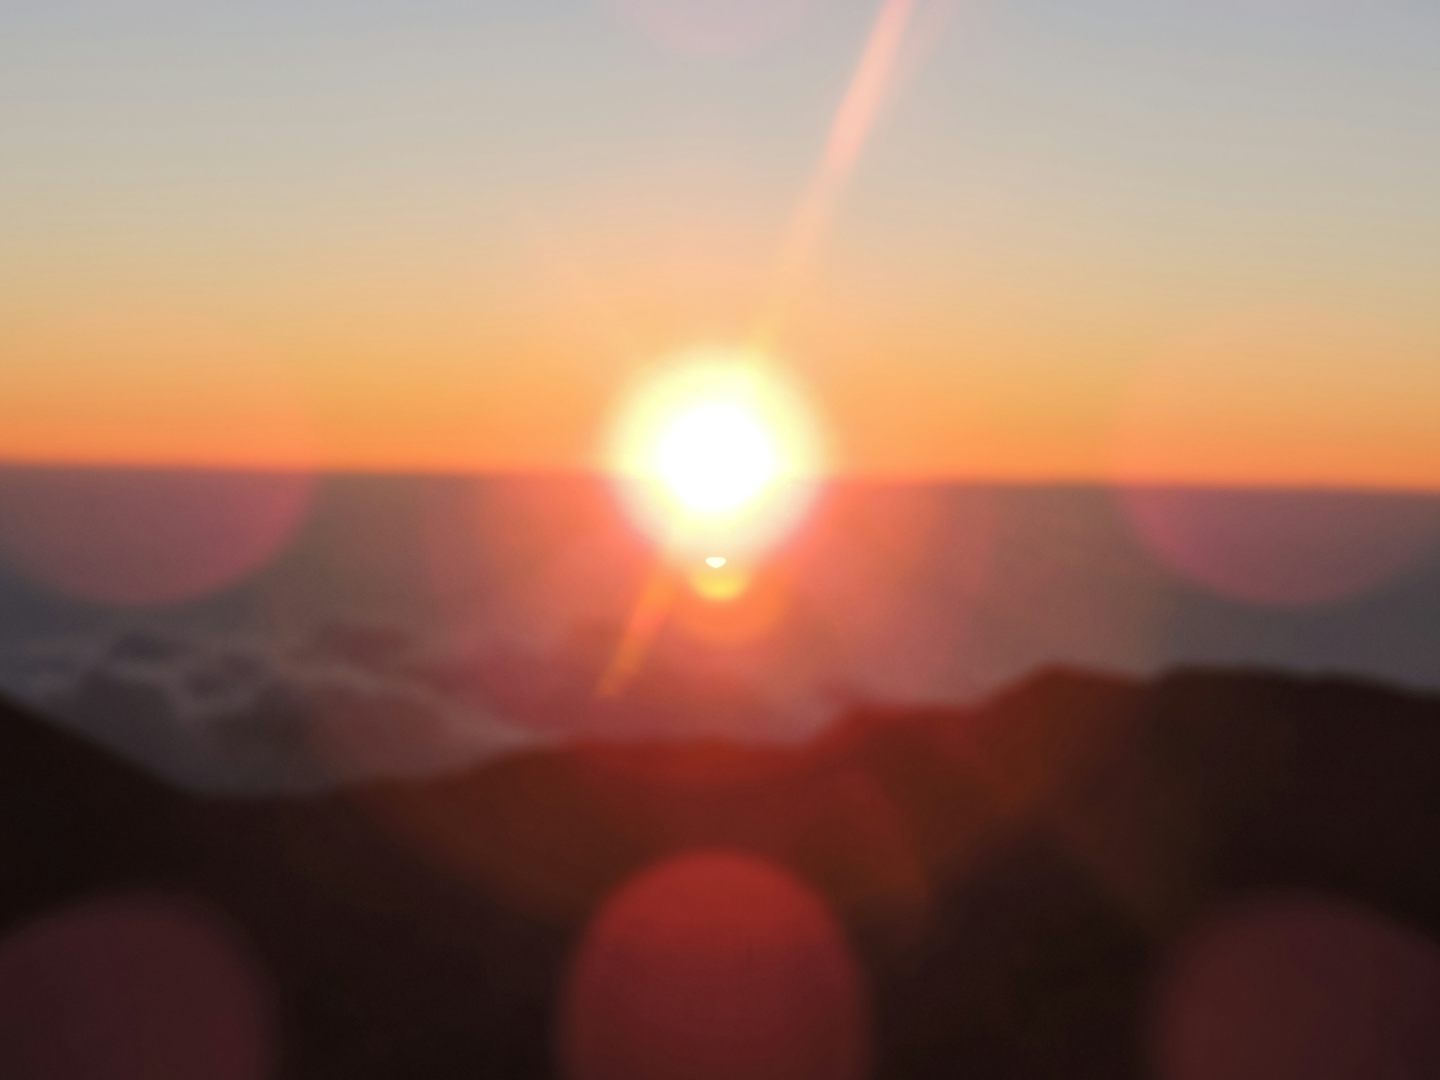 Sunrise at Haleakala, 10,000 ft. Dress warm; it was 38* that morning and it